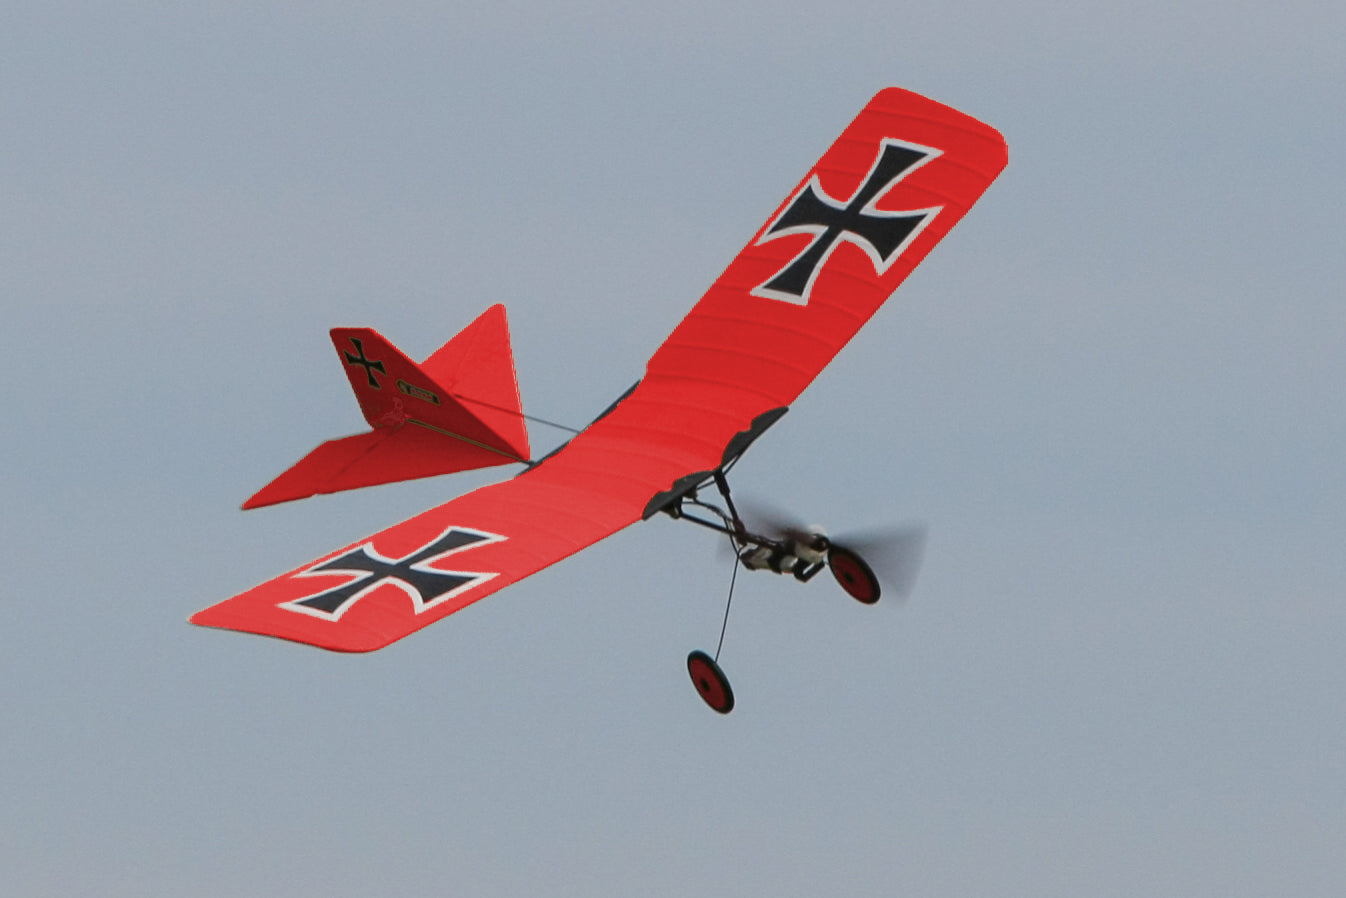 A1112 - Vintage Stick Micro RTF Airplane (Red)